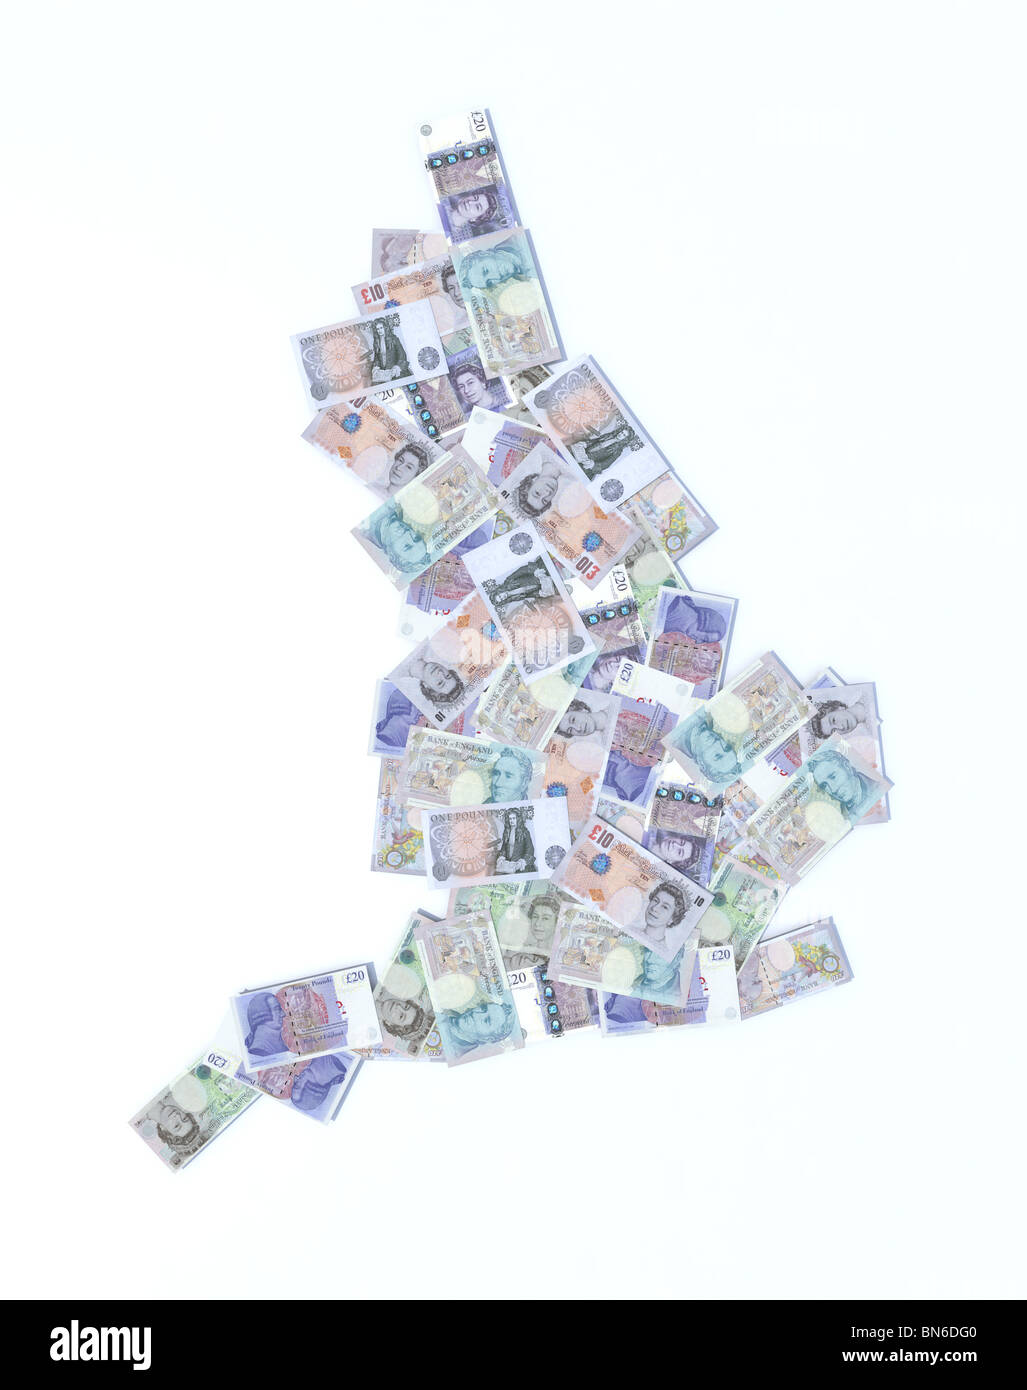 england map banknotes pound illustration Stock Photo